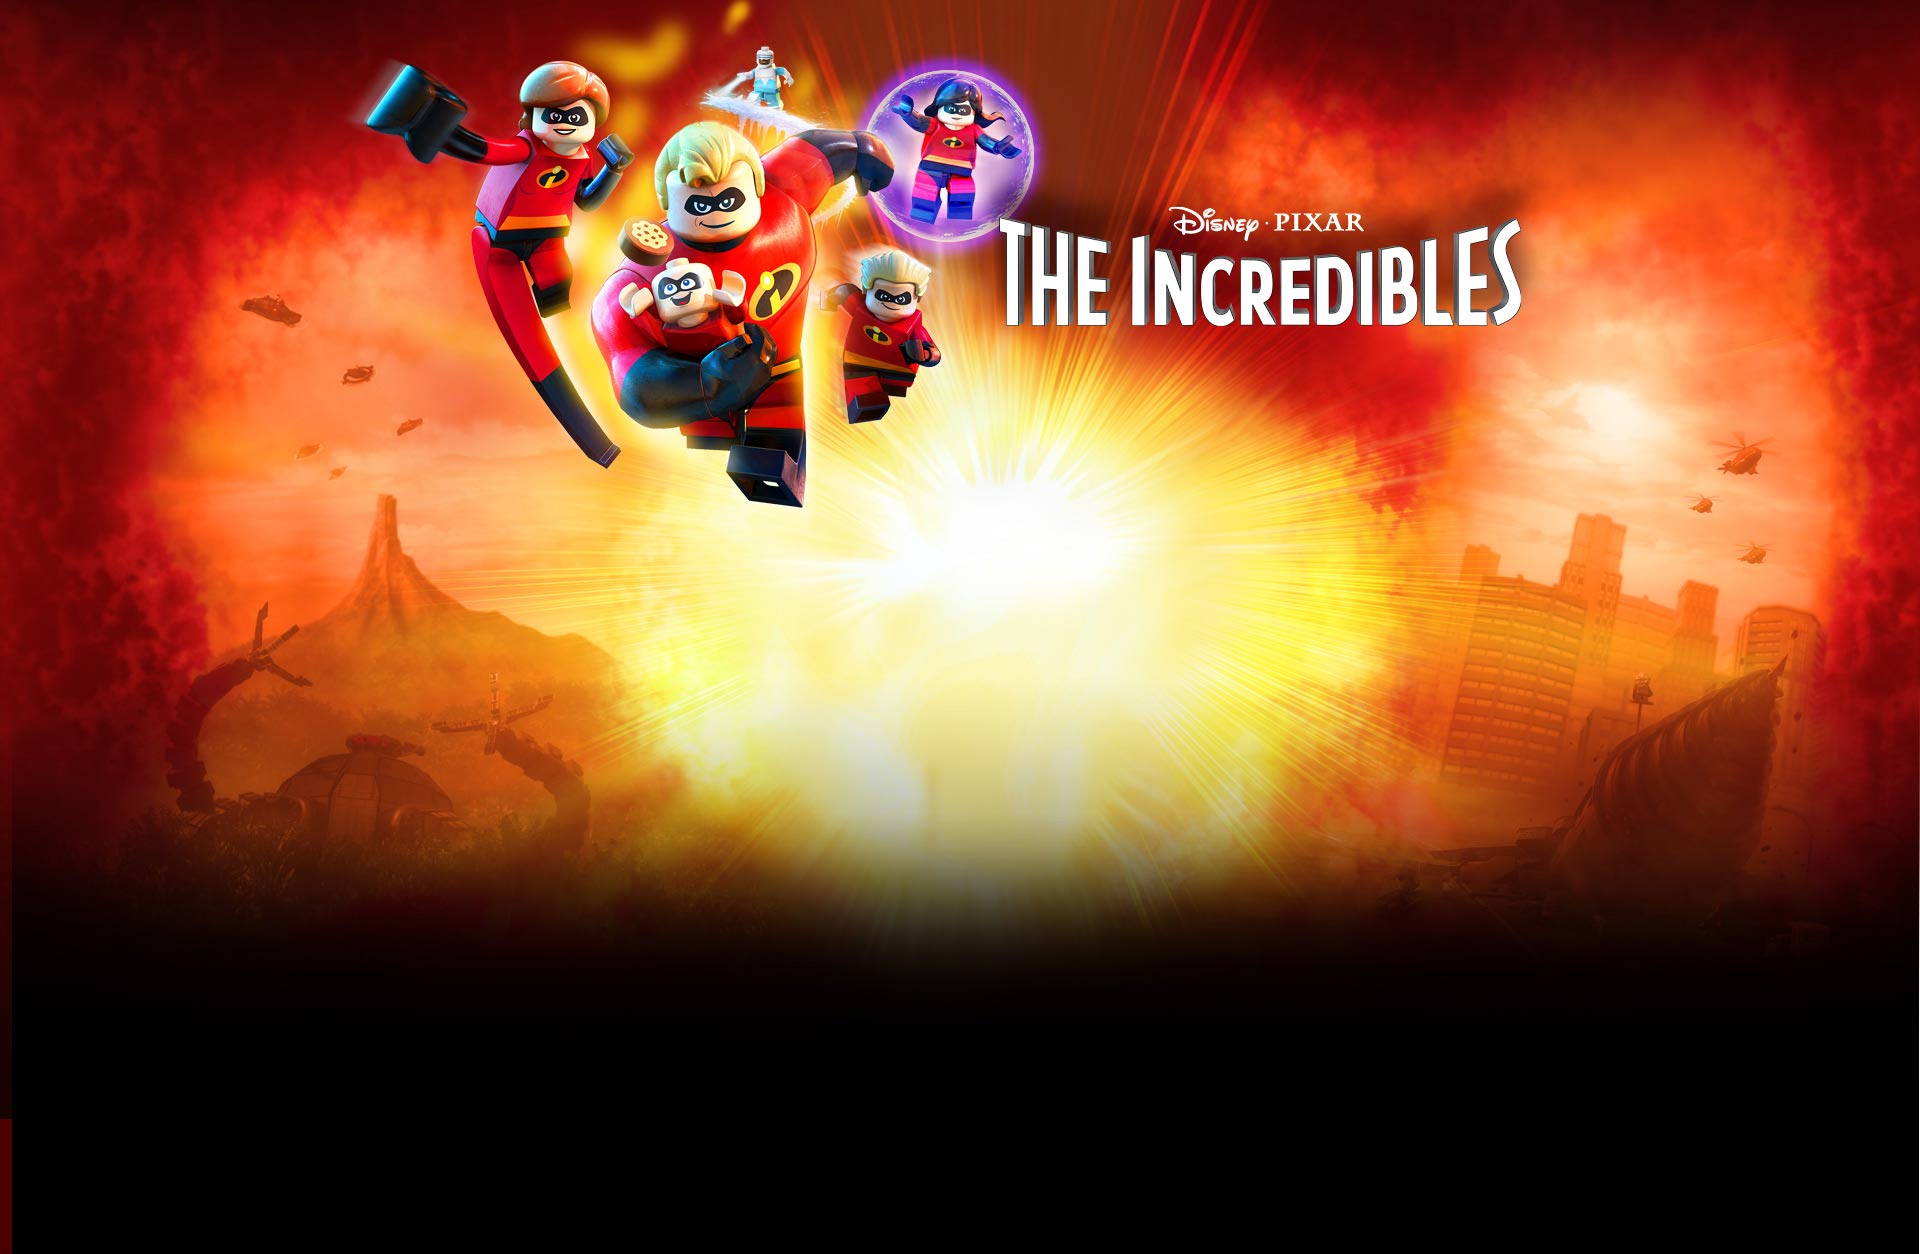 LEGO Disney•Pixar's The Incredibles